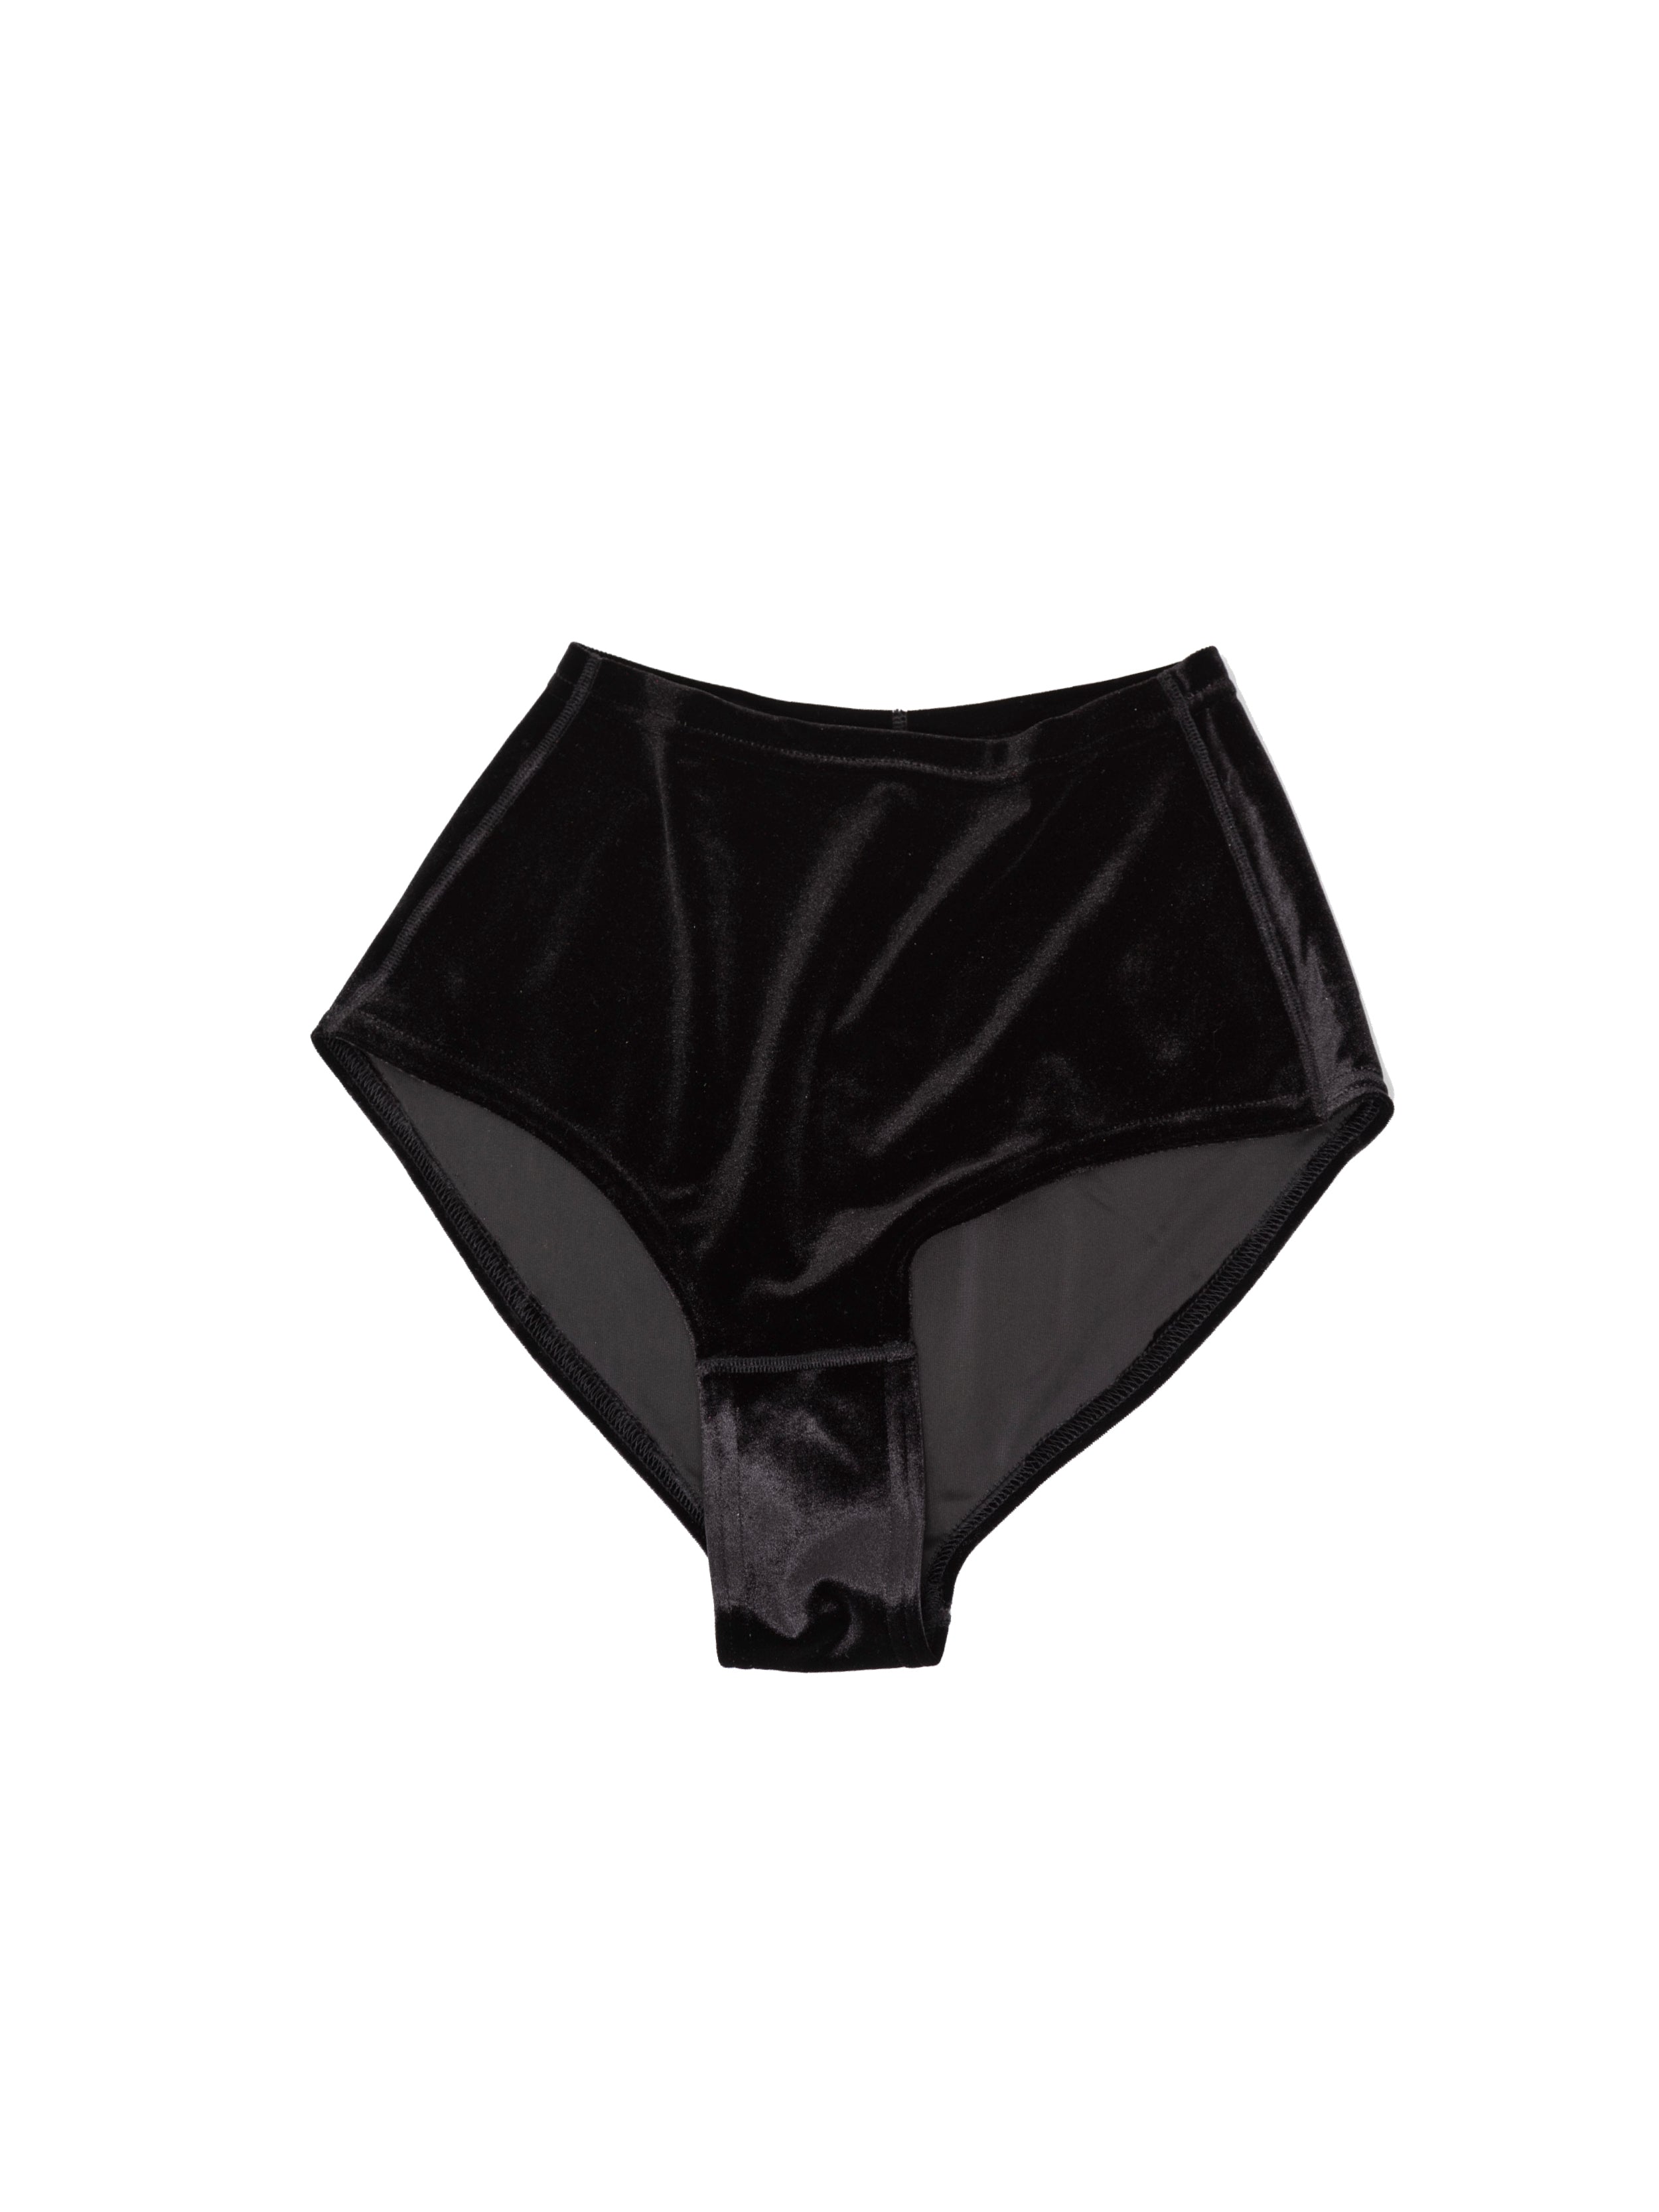 Velvet Panties, Black Velour Lingerie, Menstrual Underpants, Underwear  Comfy Bikini, Bottoms Brief Panty 